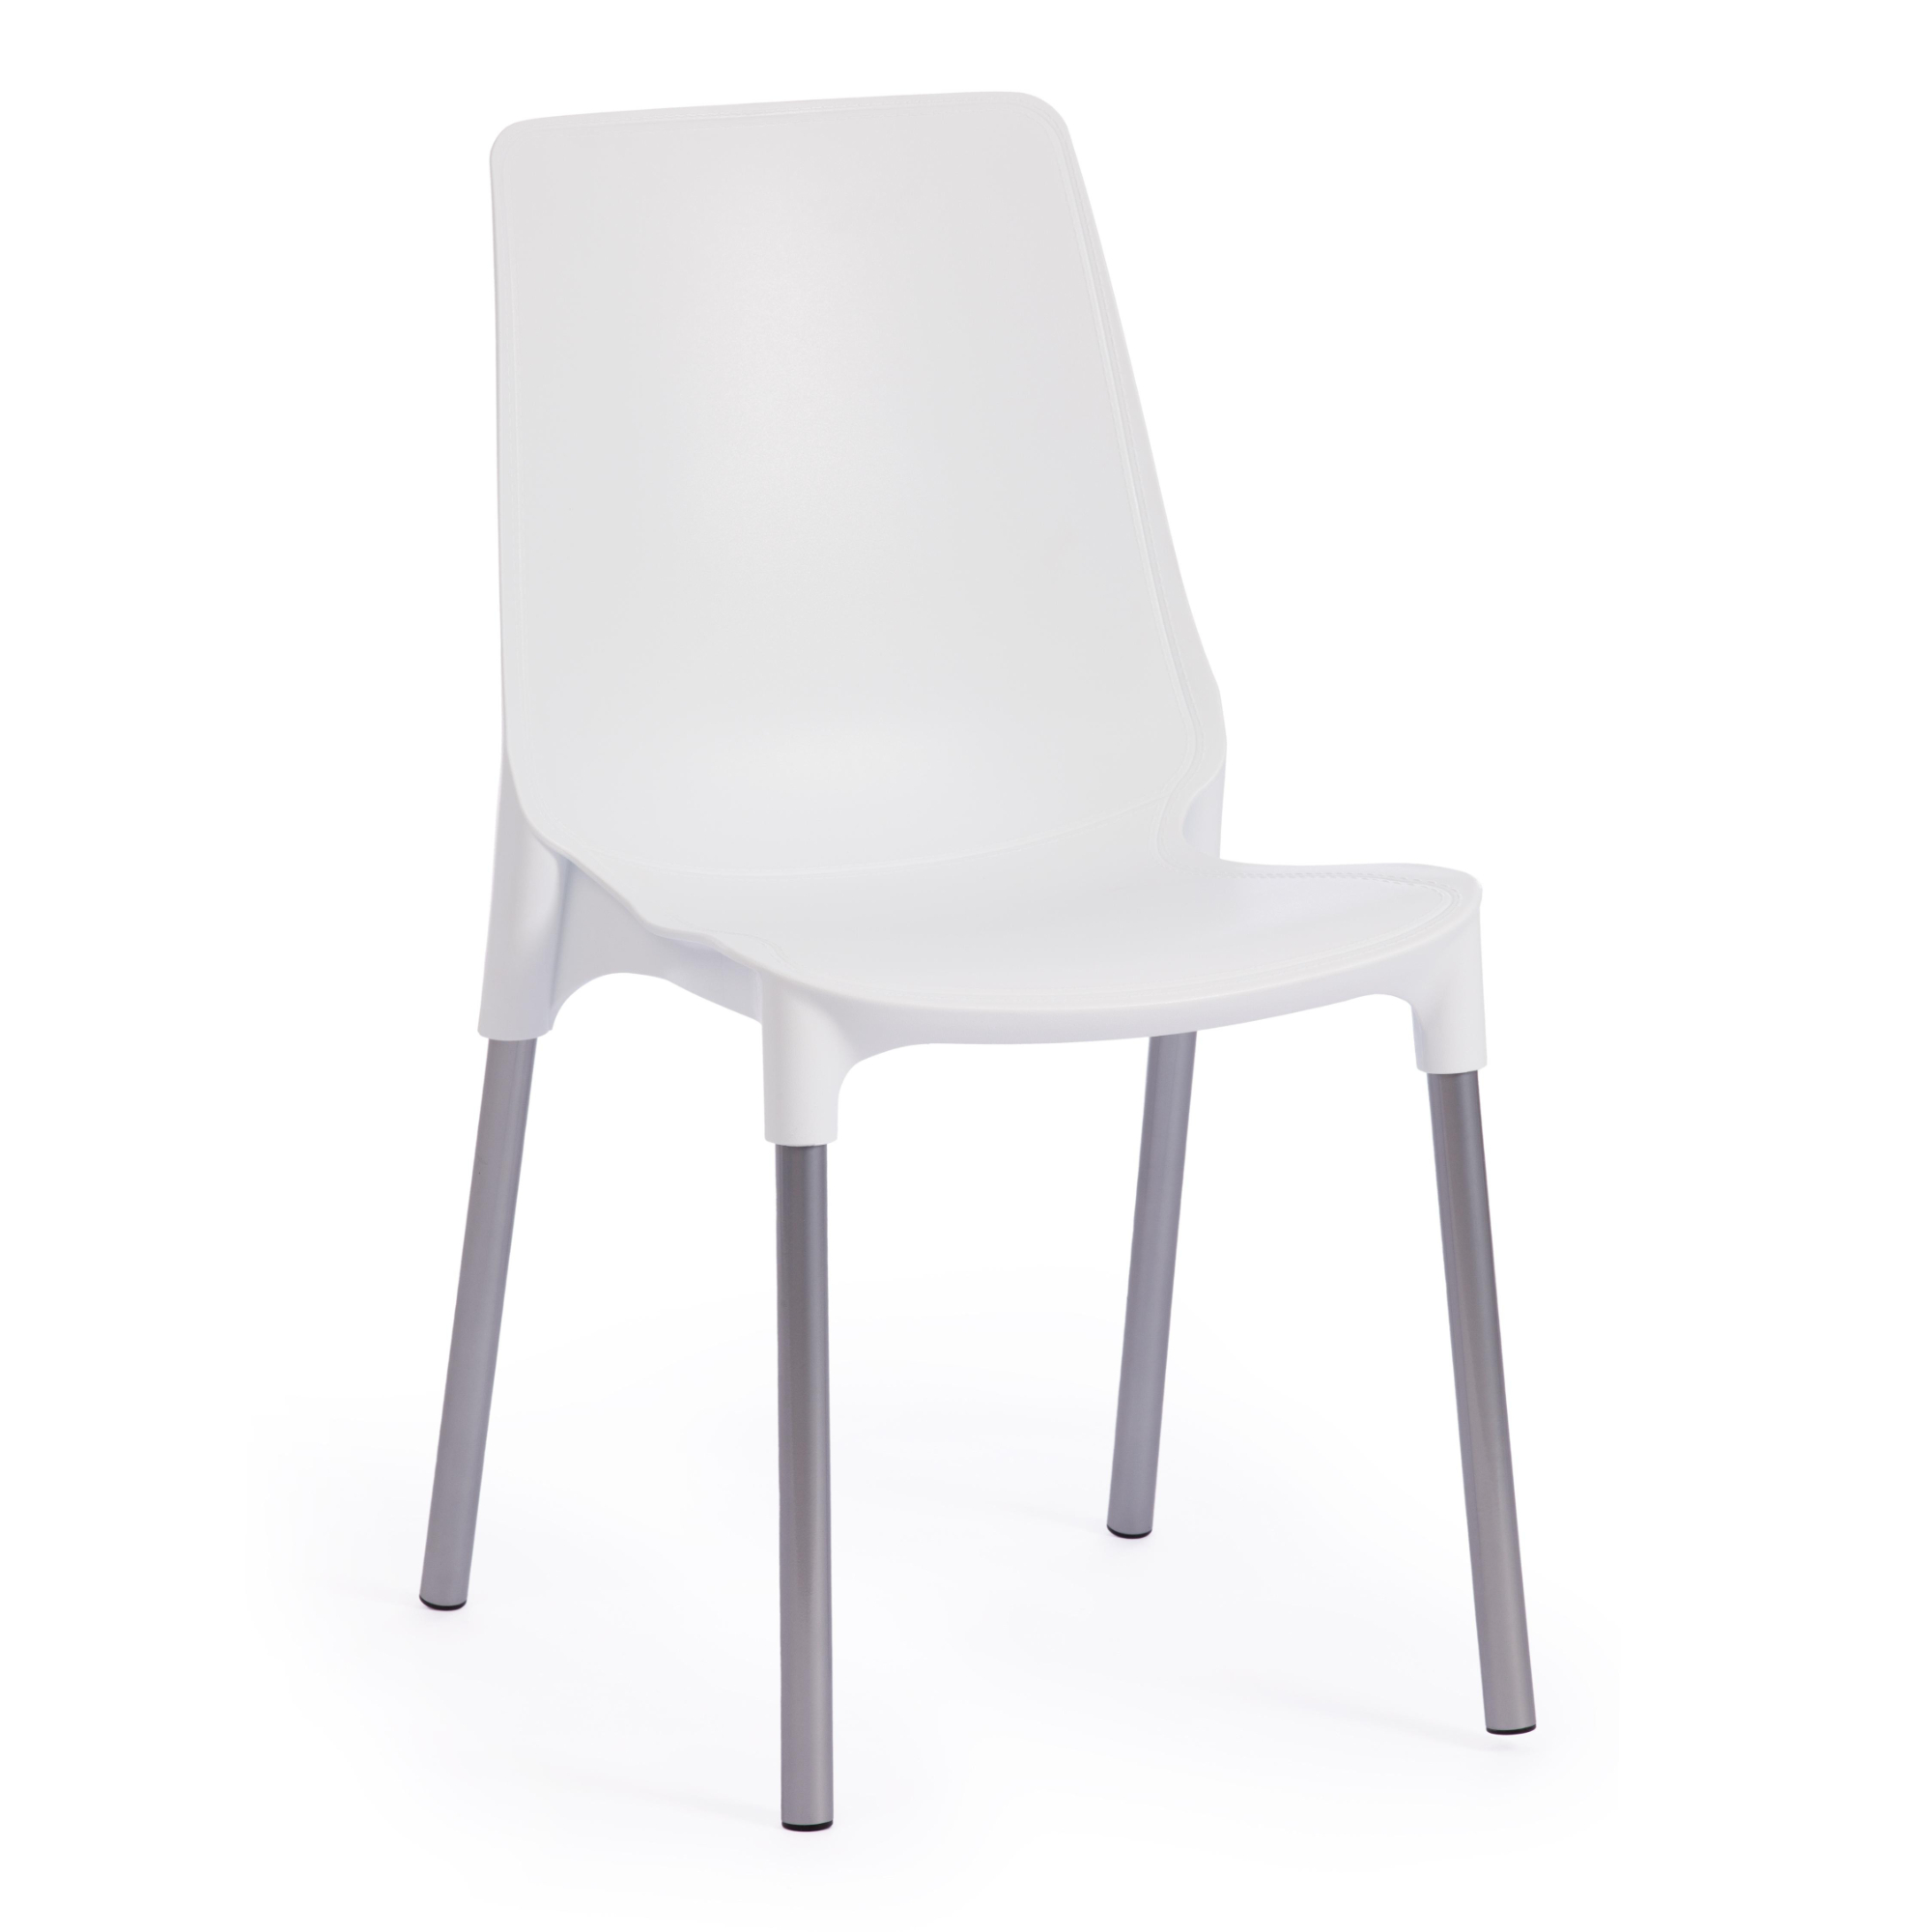 Стул ТС Genius пластиковый белый с хромированными ножками 46х56х84 см стул тс cindy chair пластиковый с ножками из бука белый 45х51х82 см